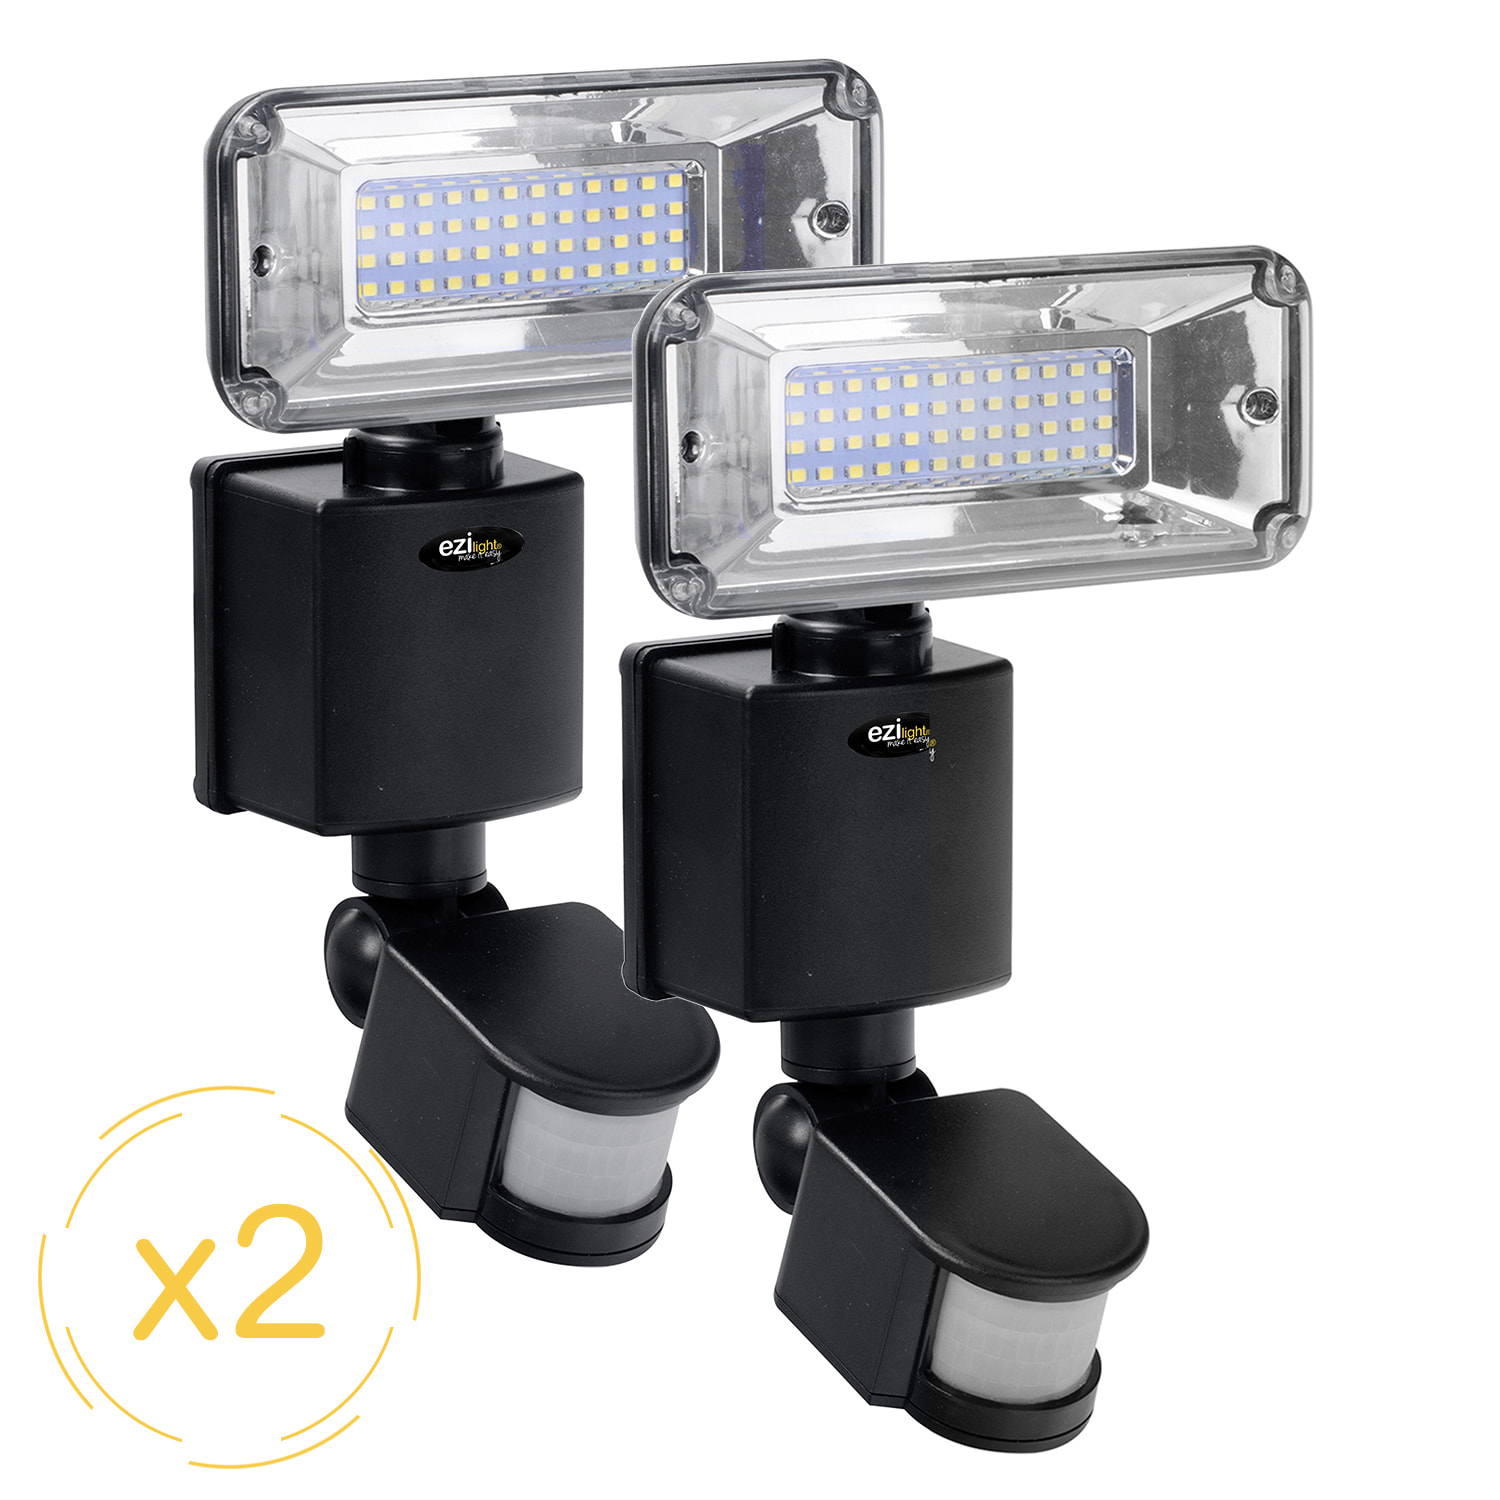 EZIlight® Solar pro 1 x2